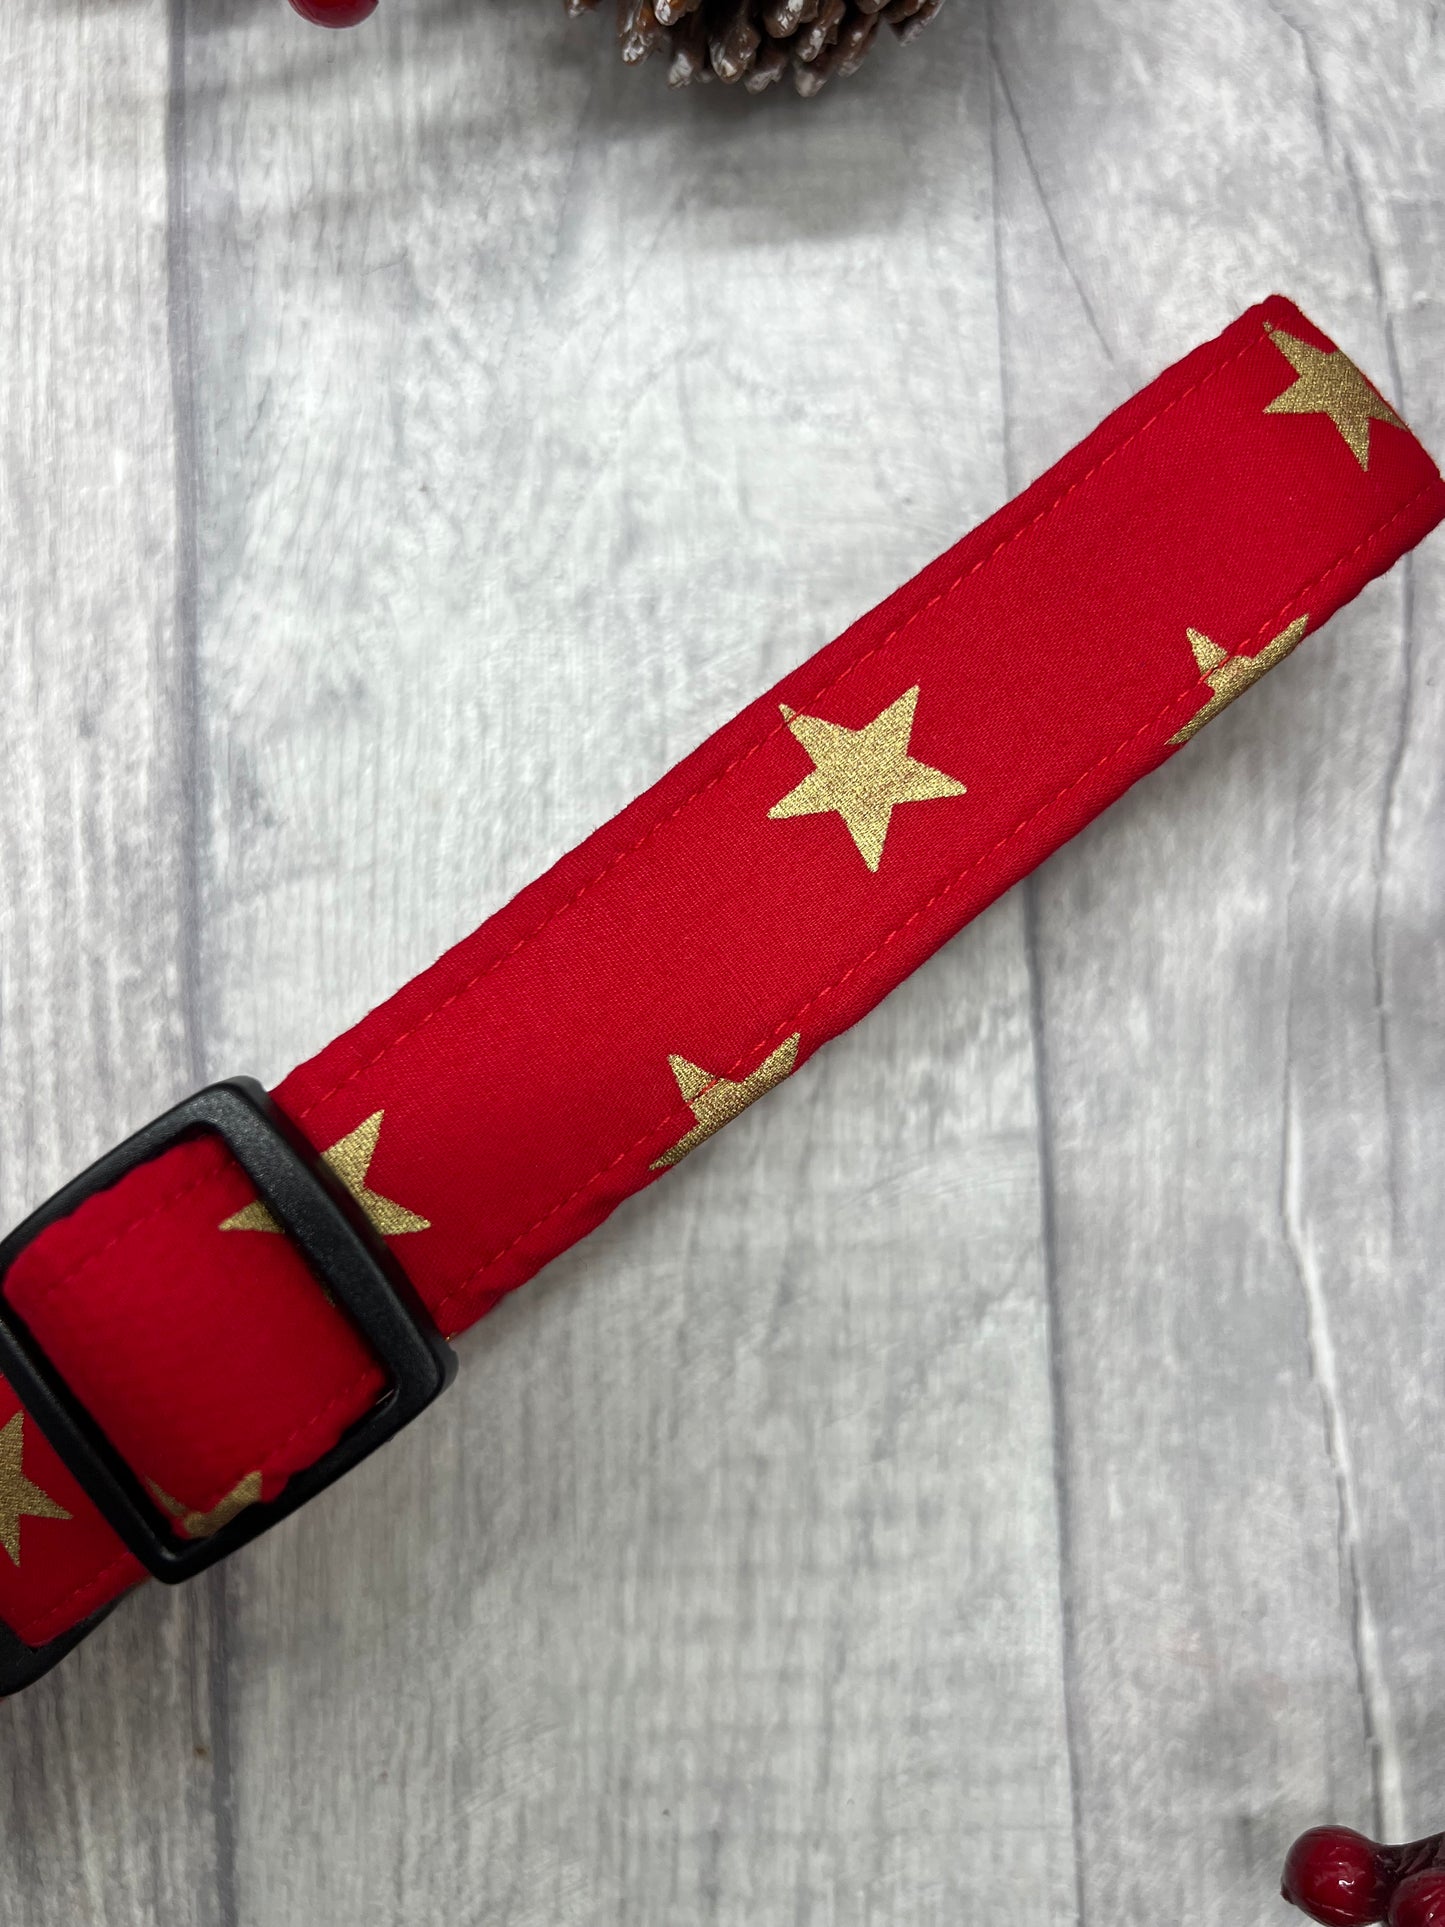 Christmas gold star on red dog collar